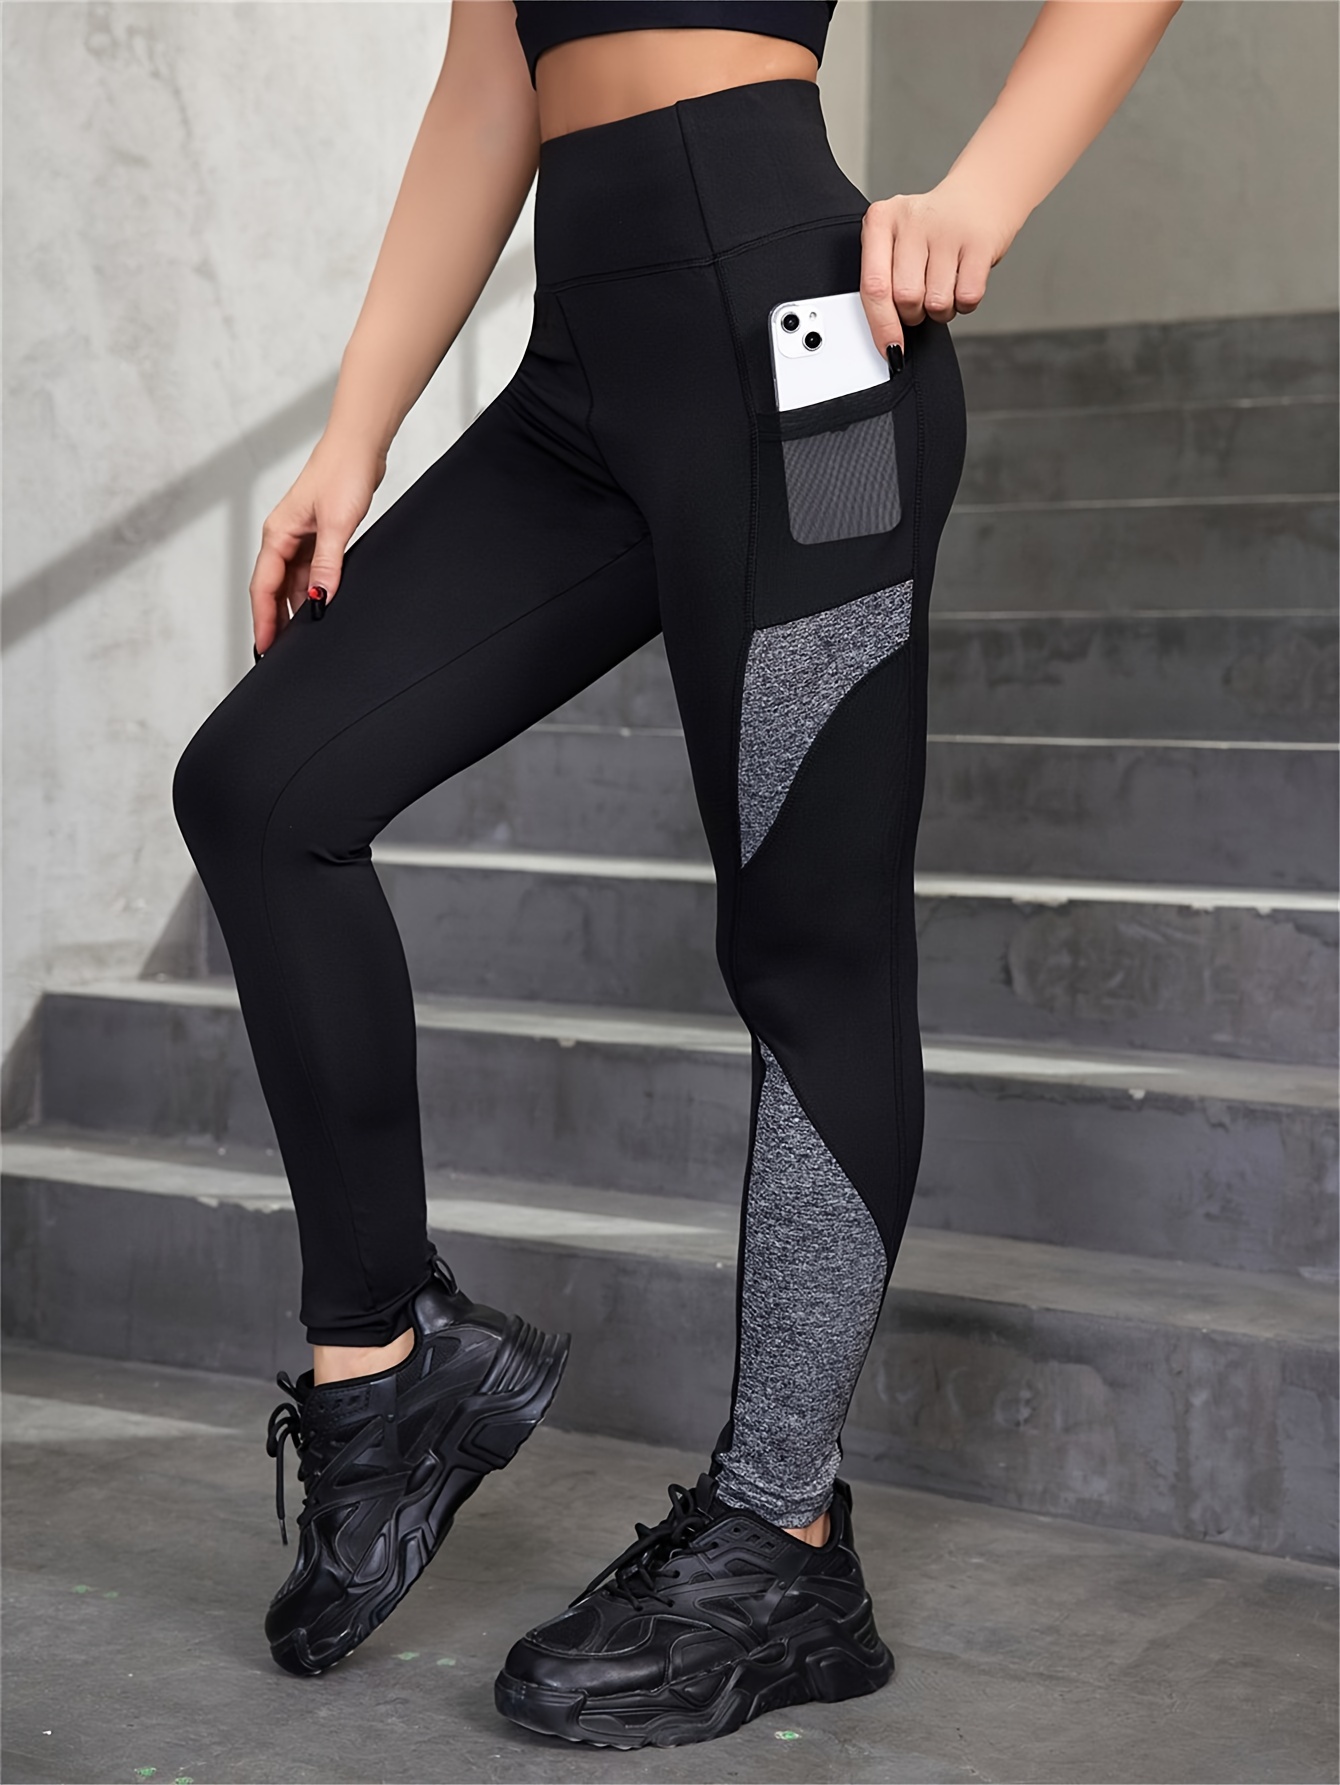 High rise color block athletic leggings with side pocket det (7304302)